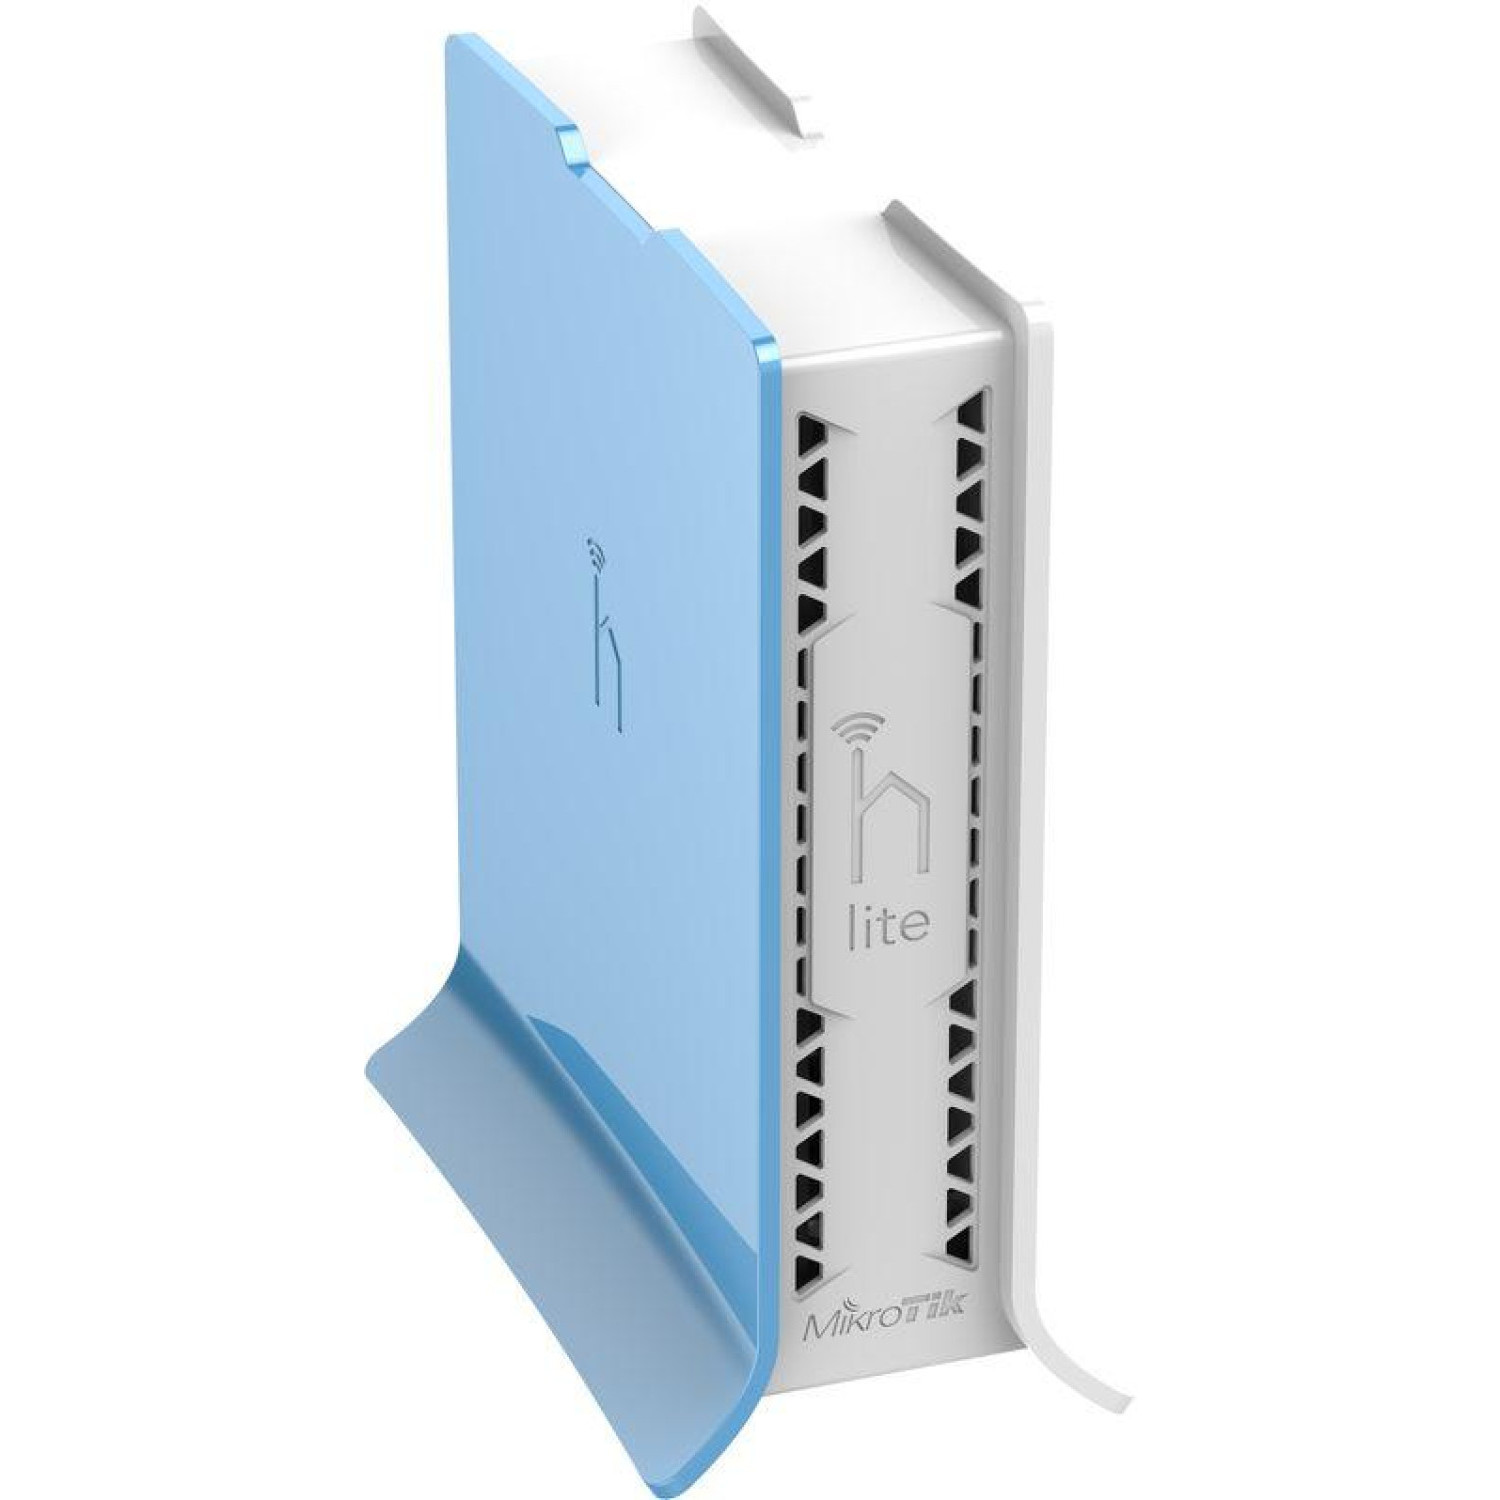 Безжичен Access Point MikroTik hAP lite RB941-2nD-TC, 32MB RAM, 4xLAN, built-in 2.4Ghz 802.11b/g/n, tower case